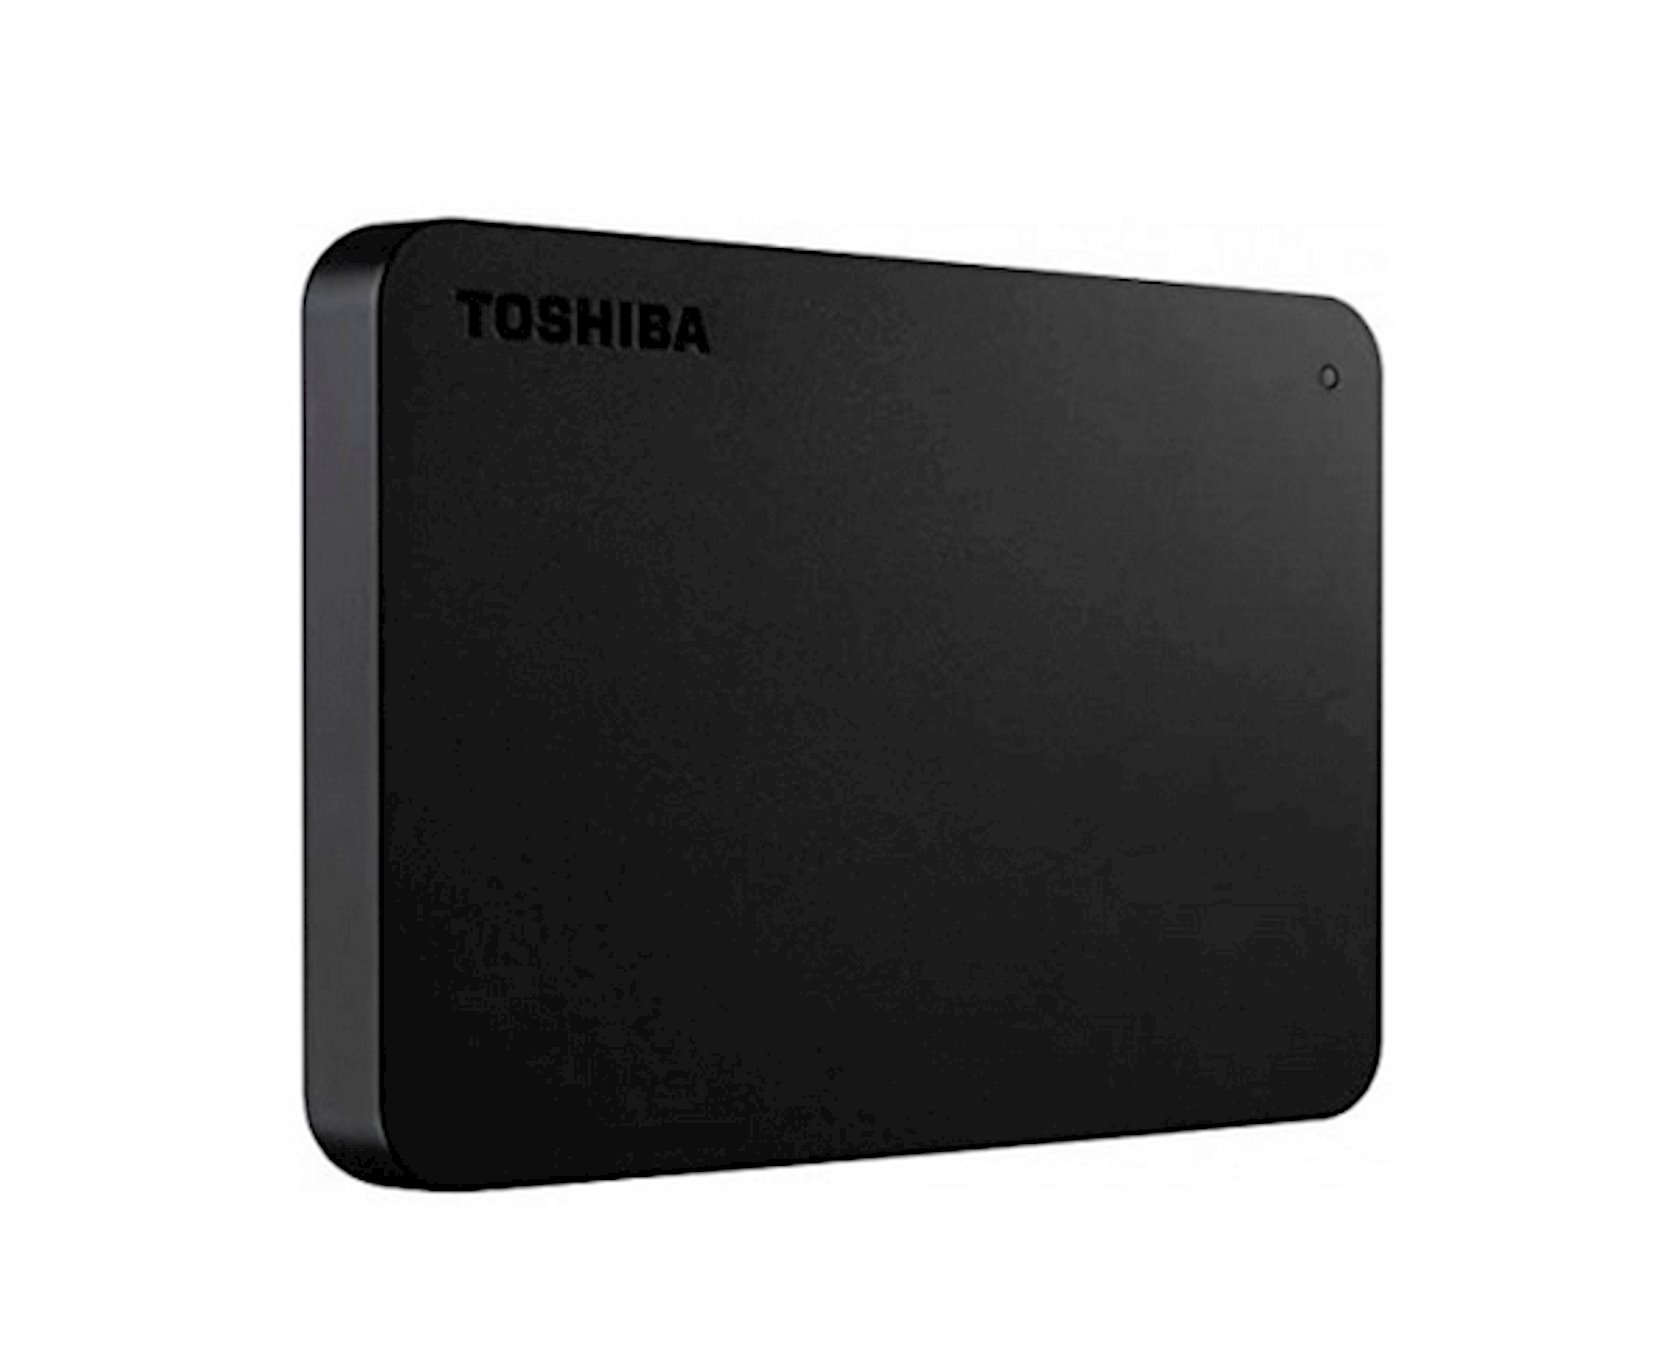 Toshiba Canvio Basics 1TB USB 3.0 External Hard Drive DTB510